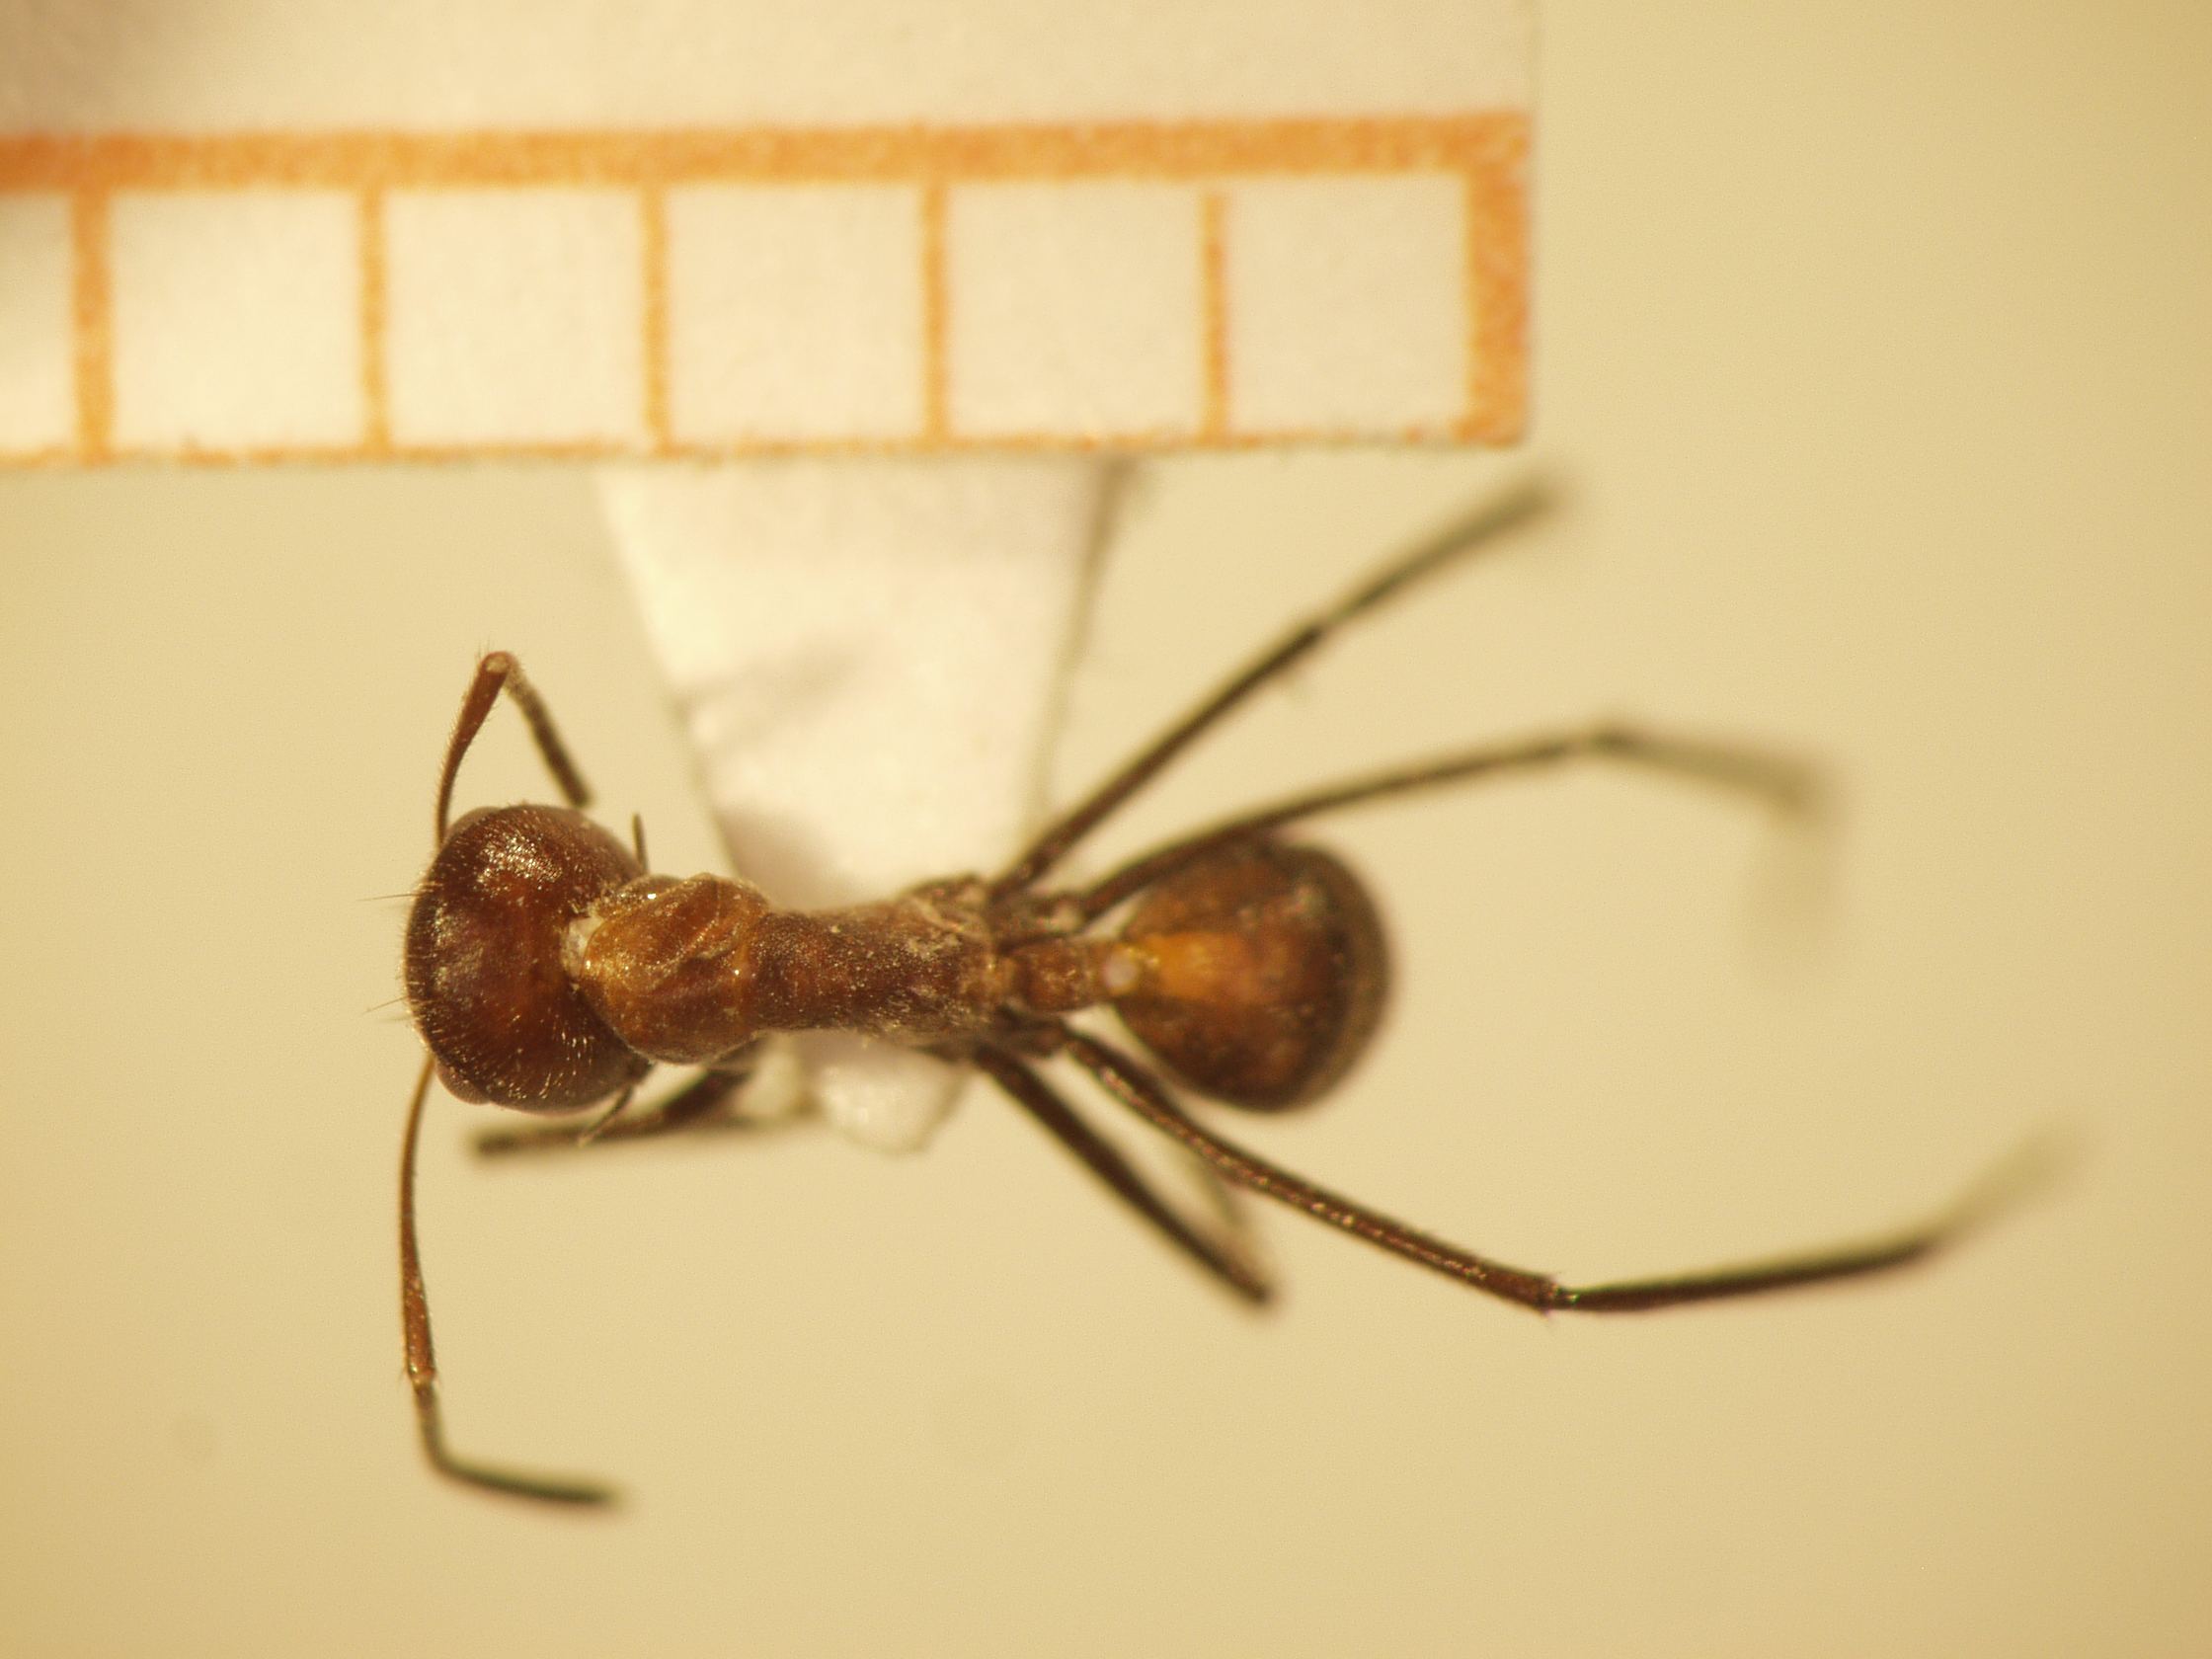 Camponotus 19 dorsal